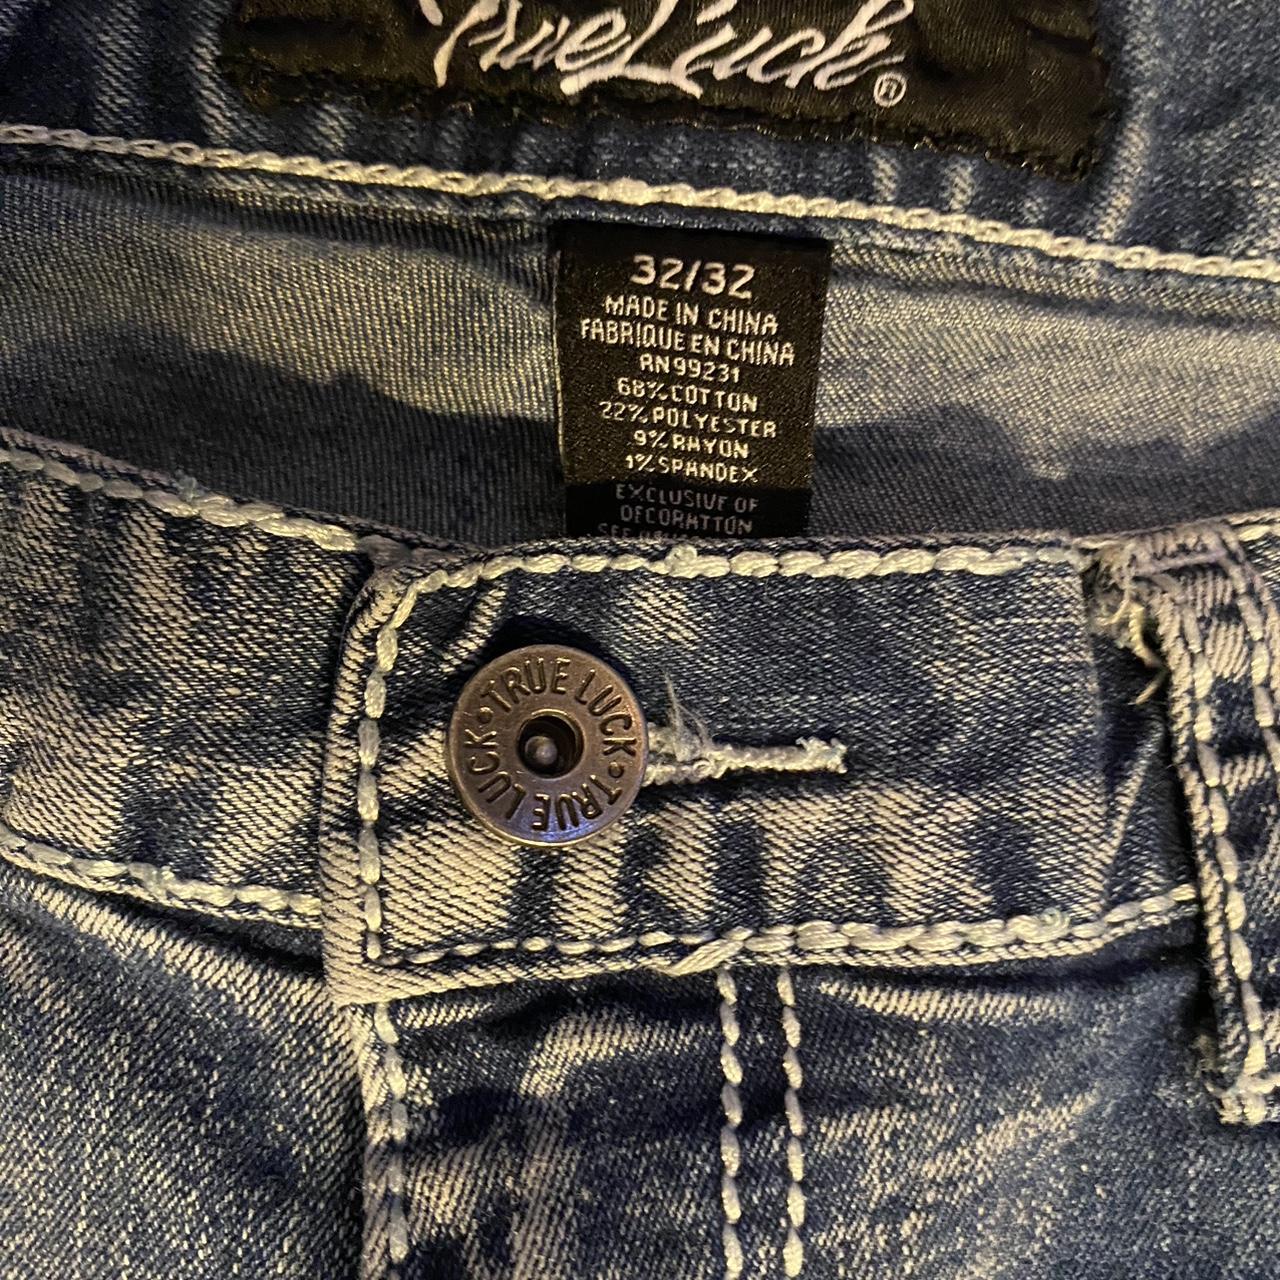 Sick true luck jeans Size 32/32 Real... - Depop